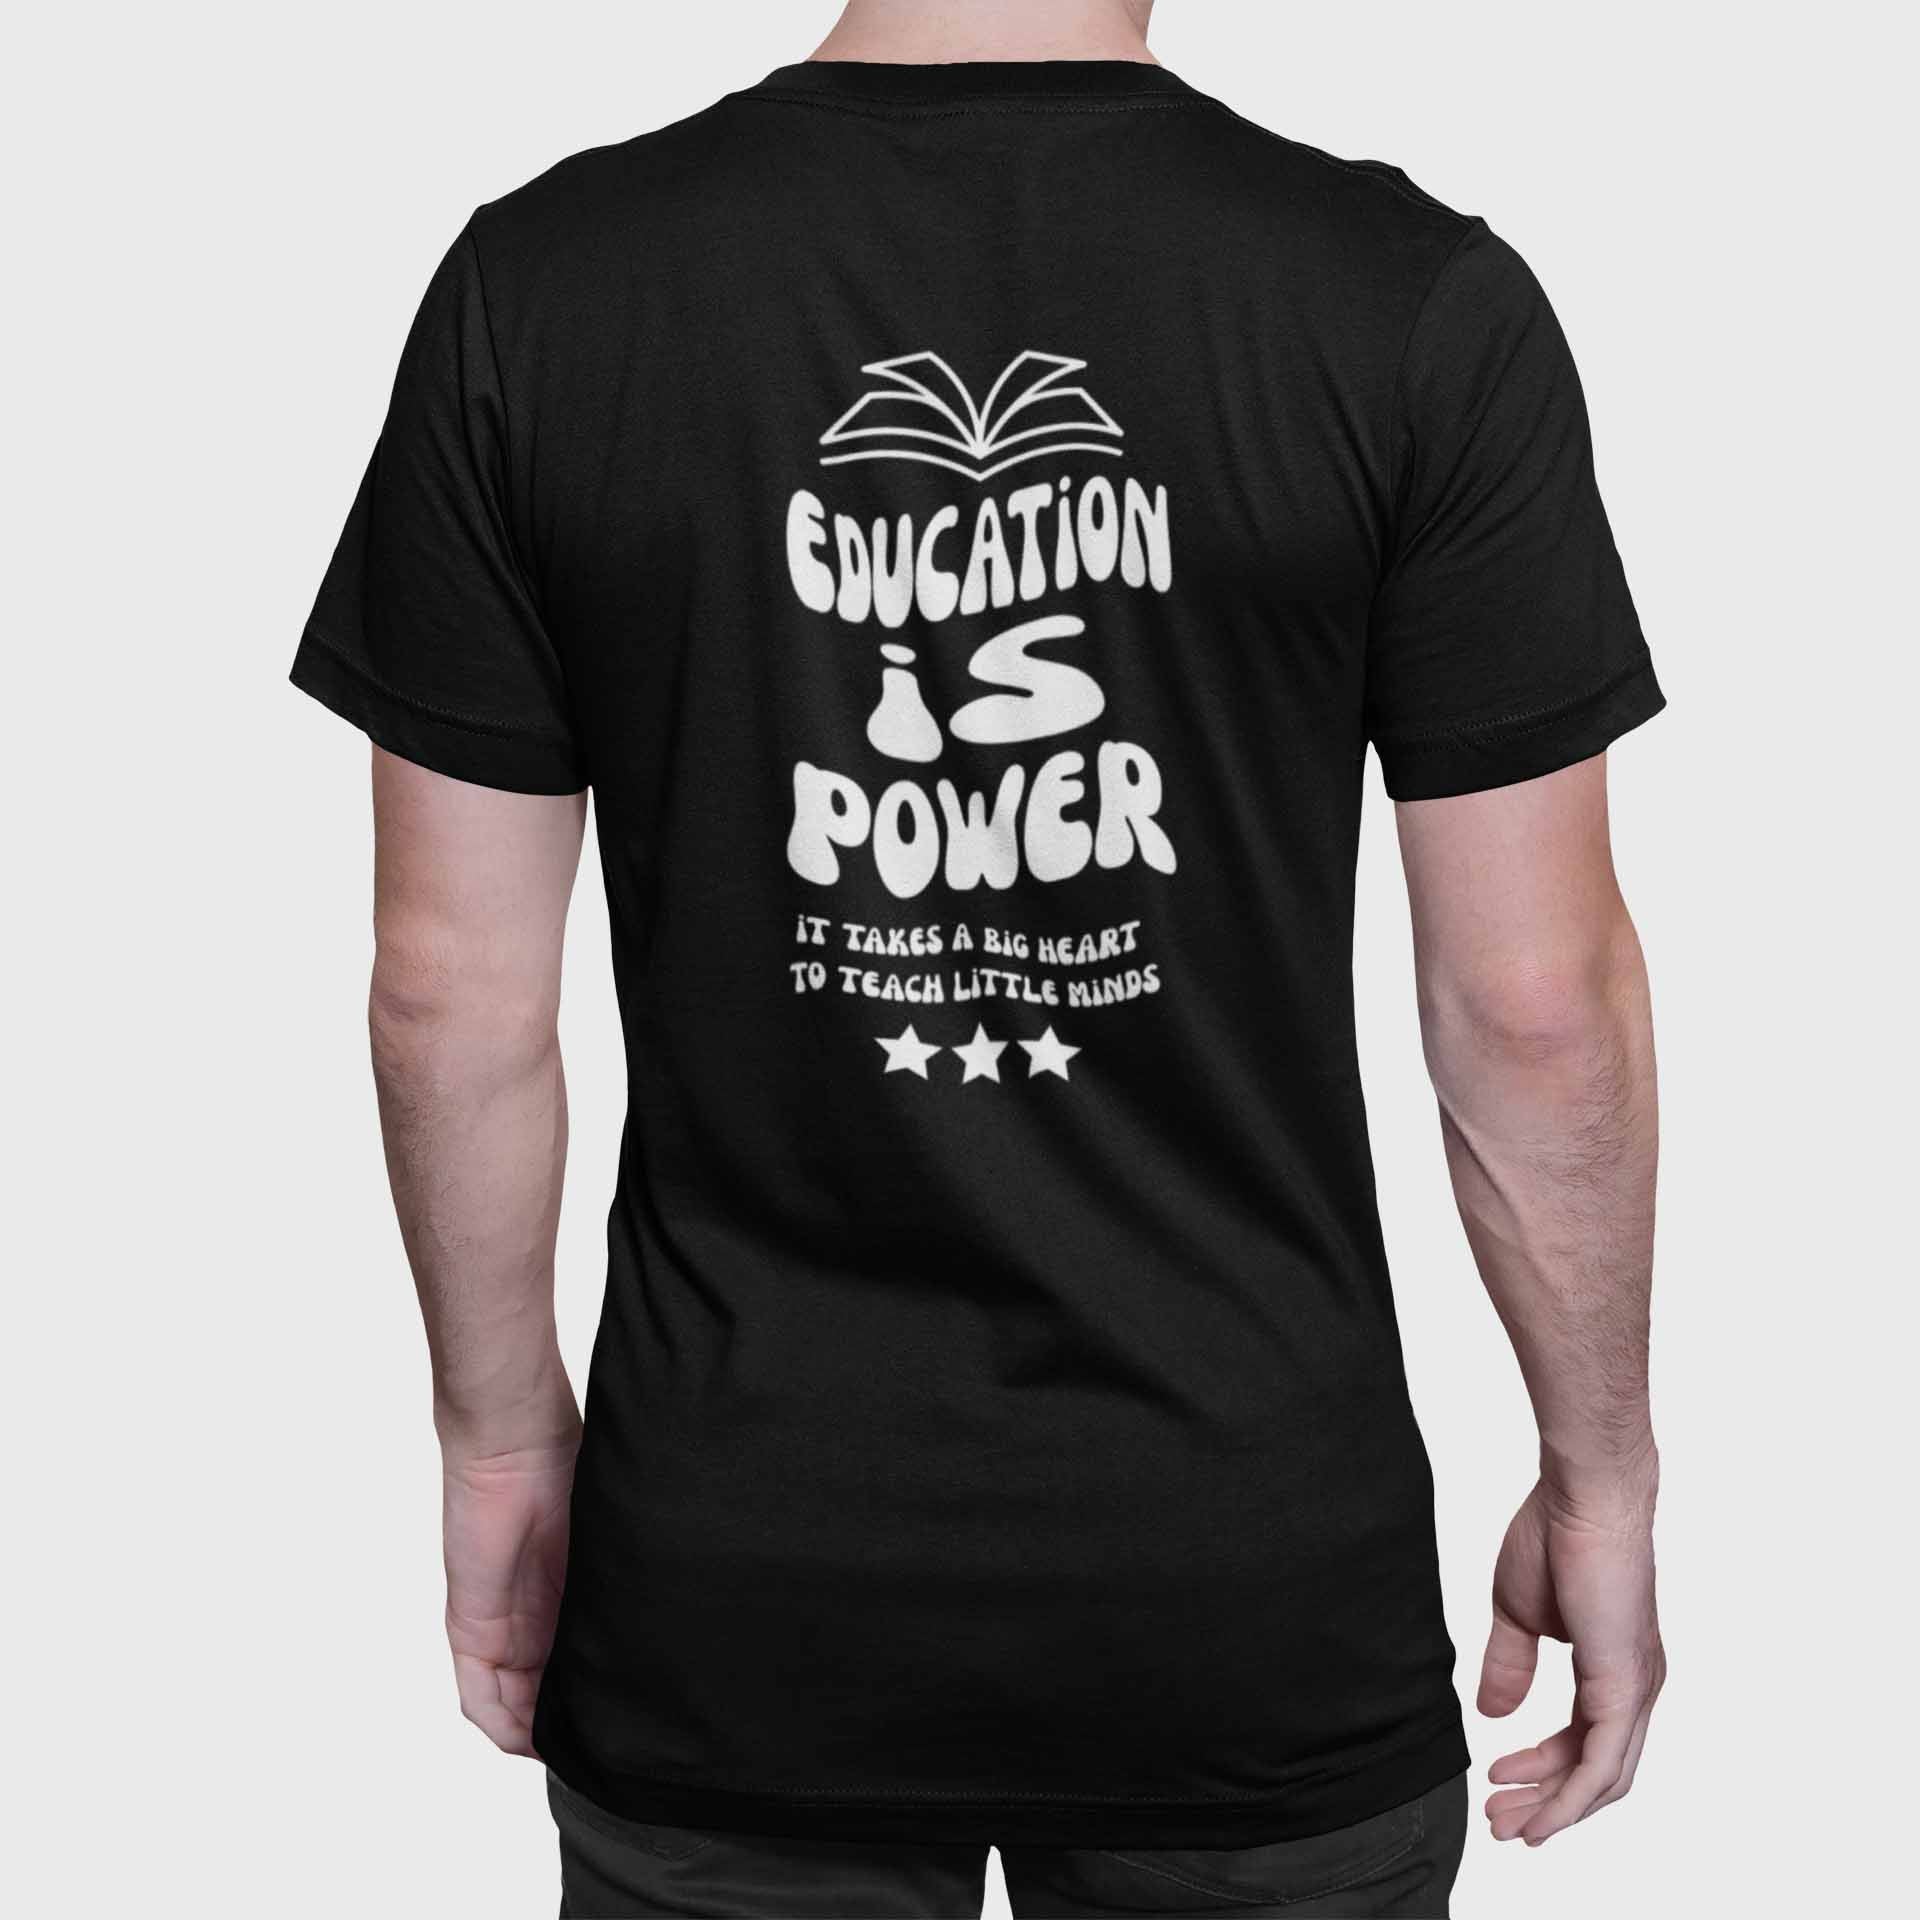 "Education is Power" Sachemii Organic Fair Regular T-Shirt